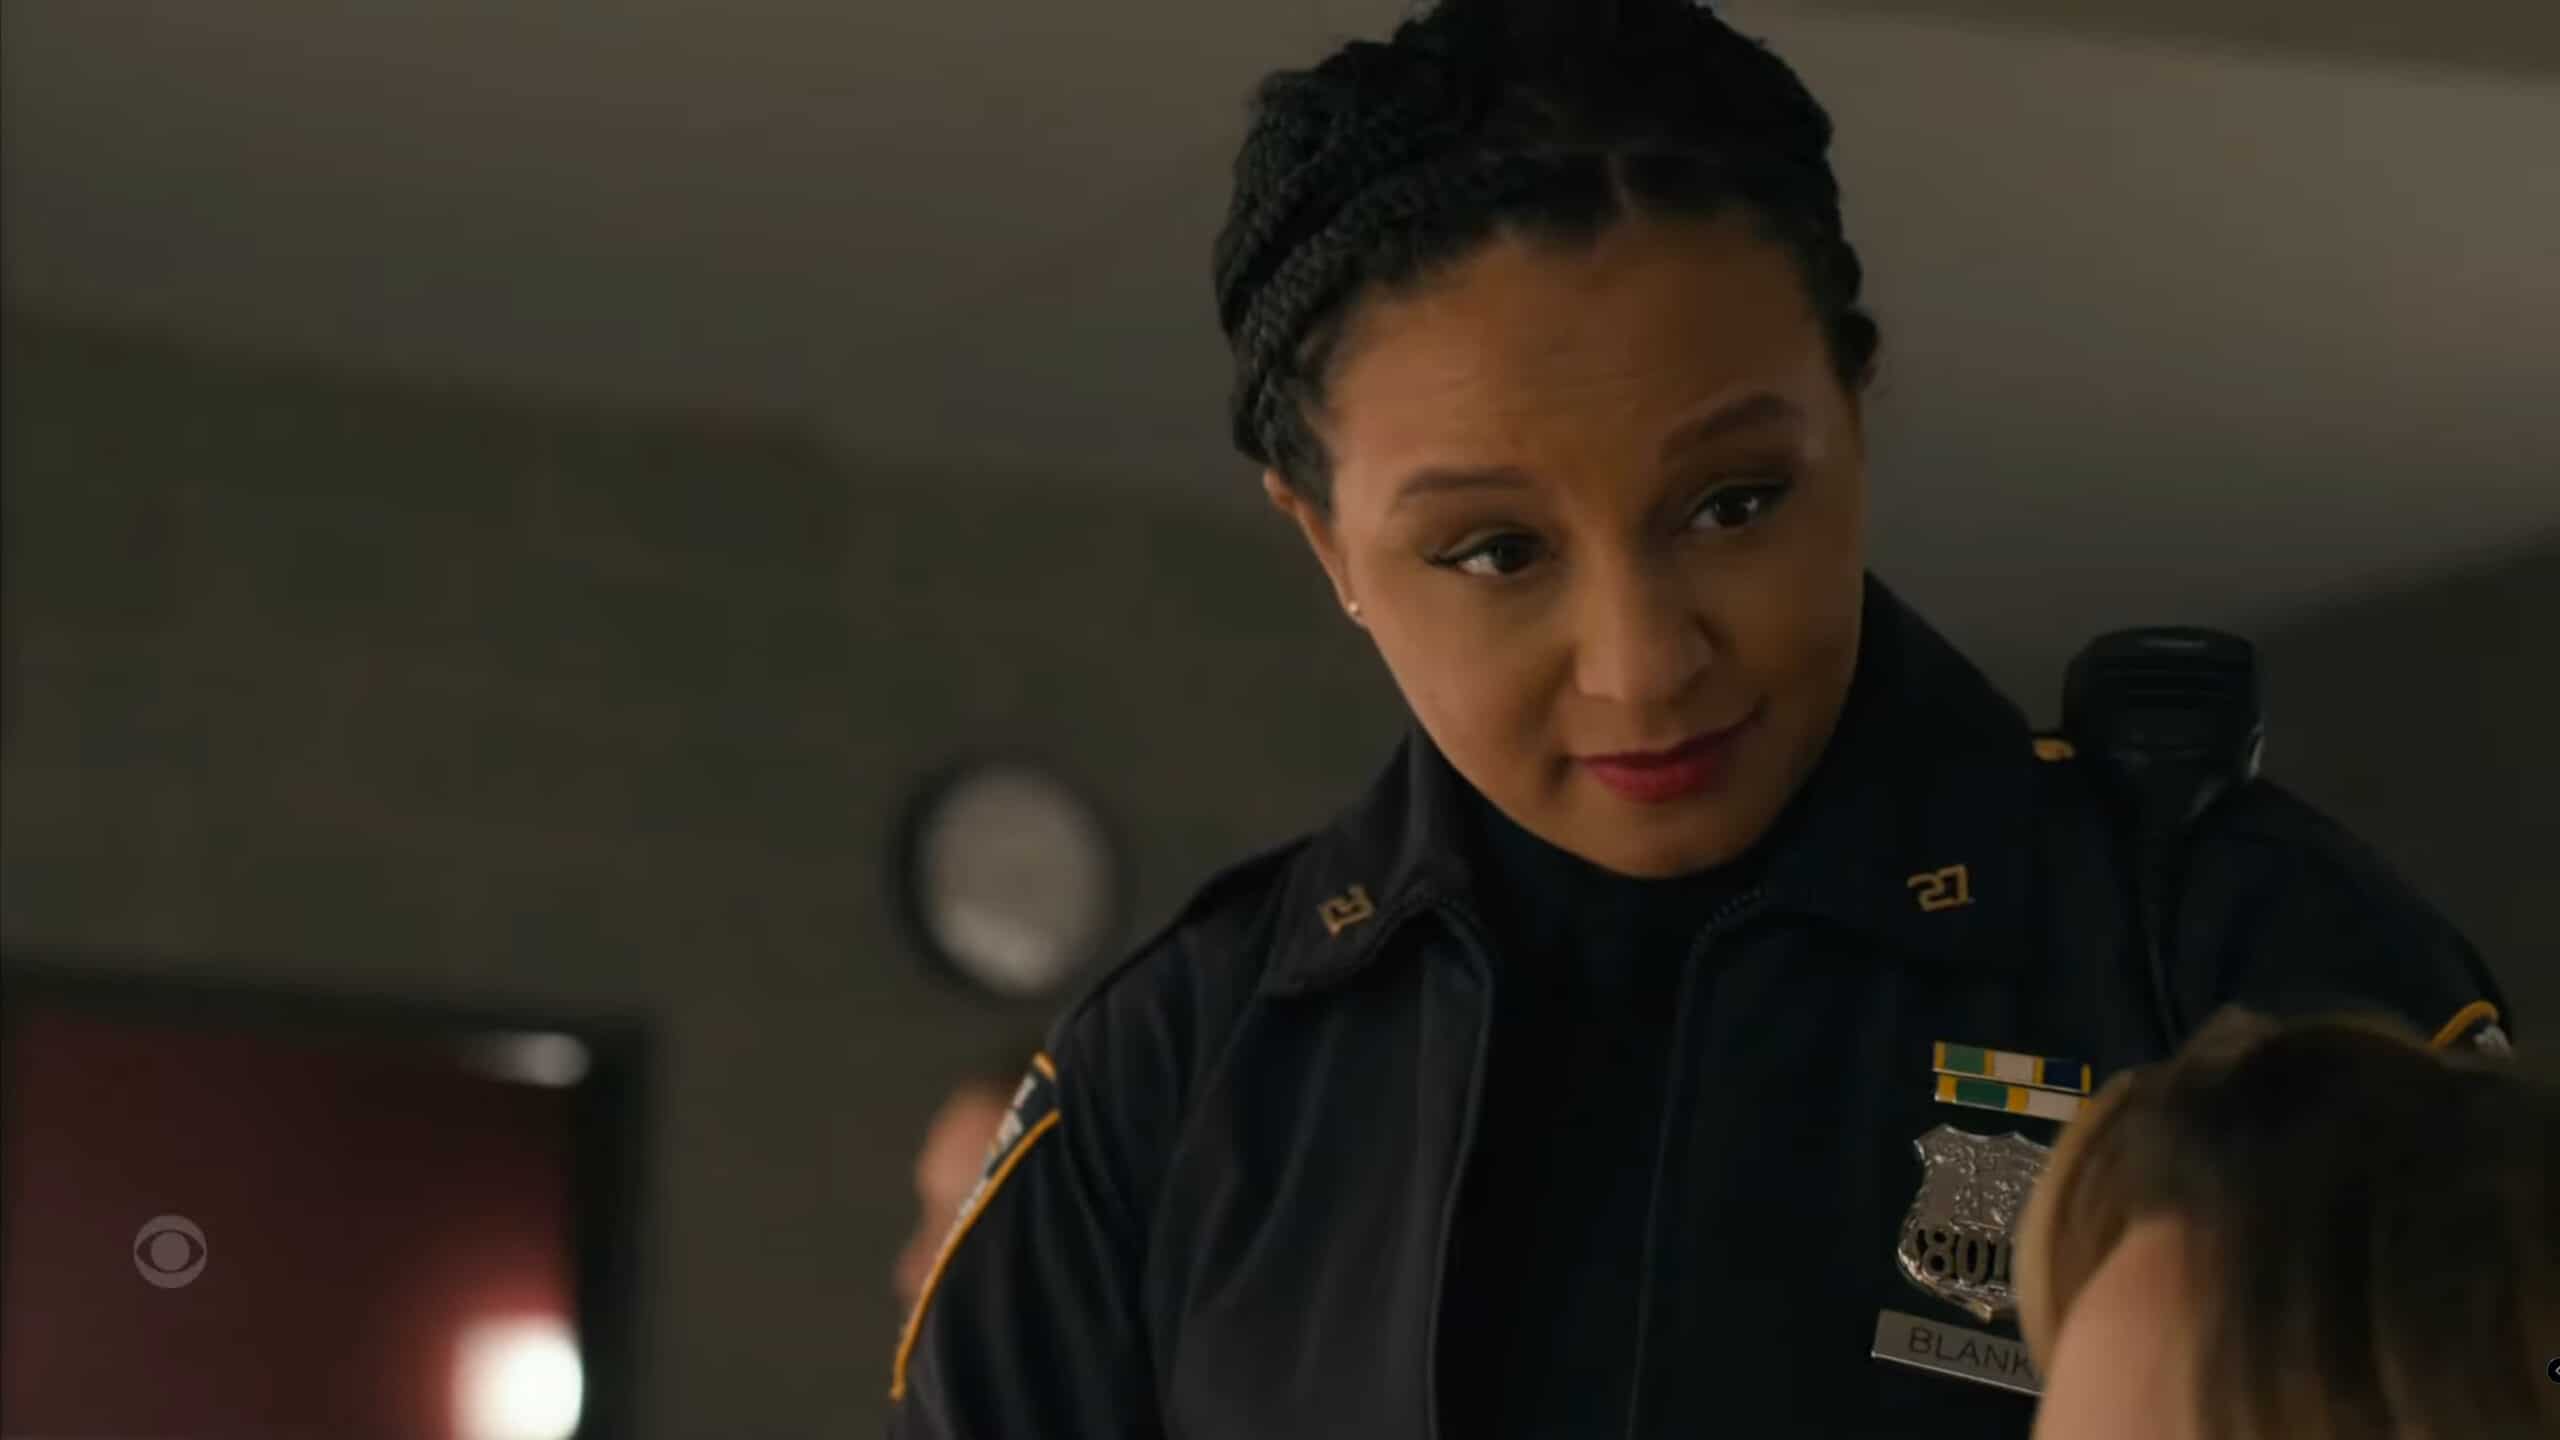 Officer Blanke (Carra Patterson)